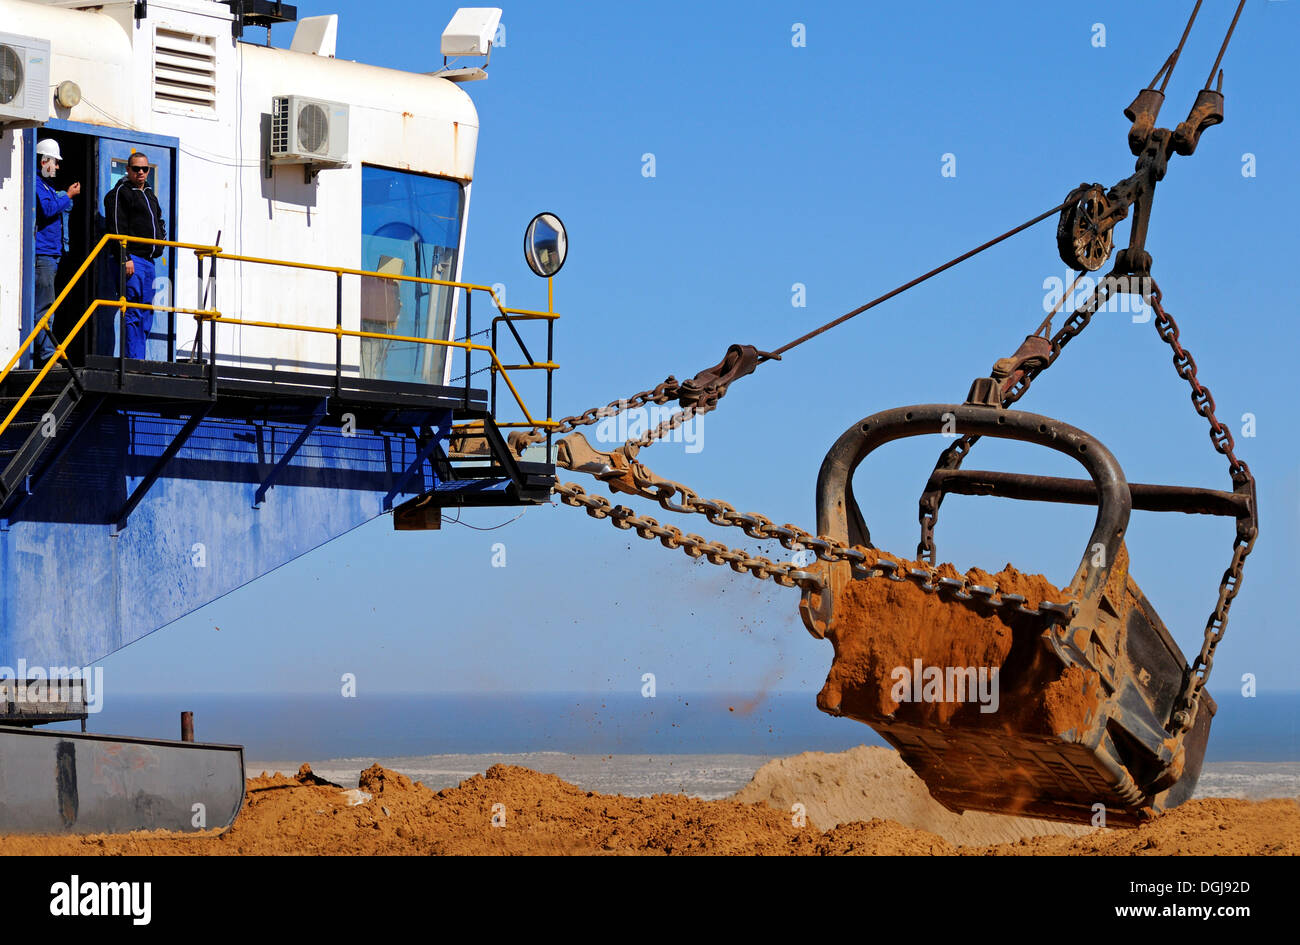 Dragline excavator operating, De Beers diamond mine, Kleinzee, South Africa, Africa Stock Photo